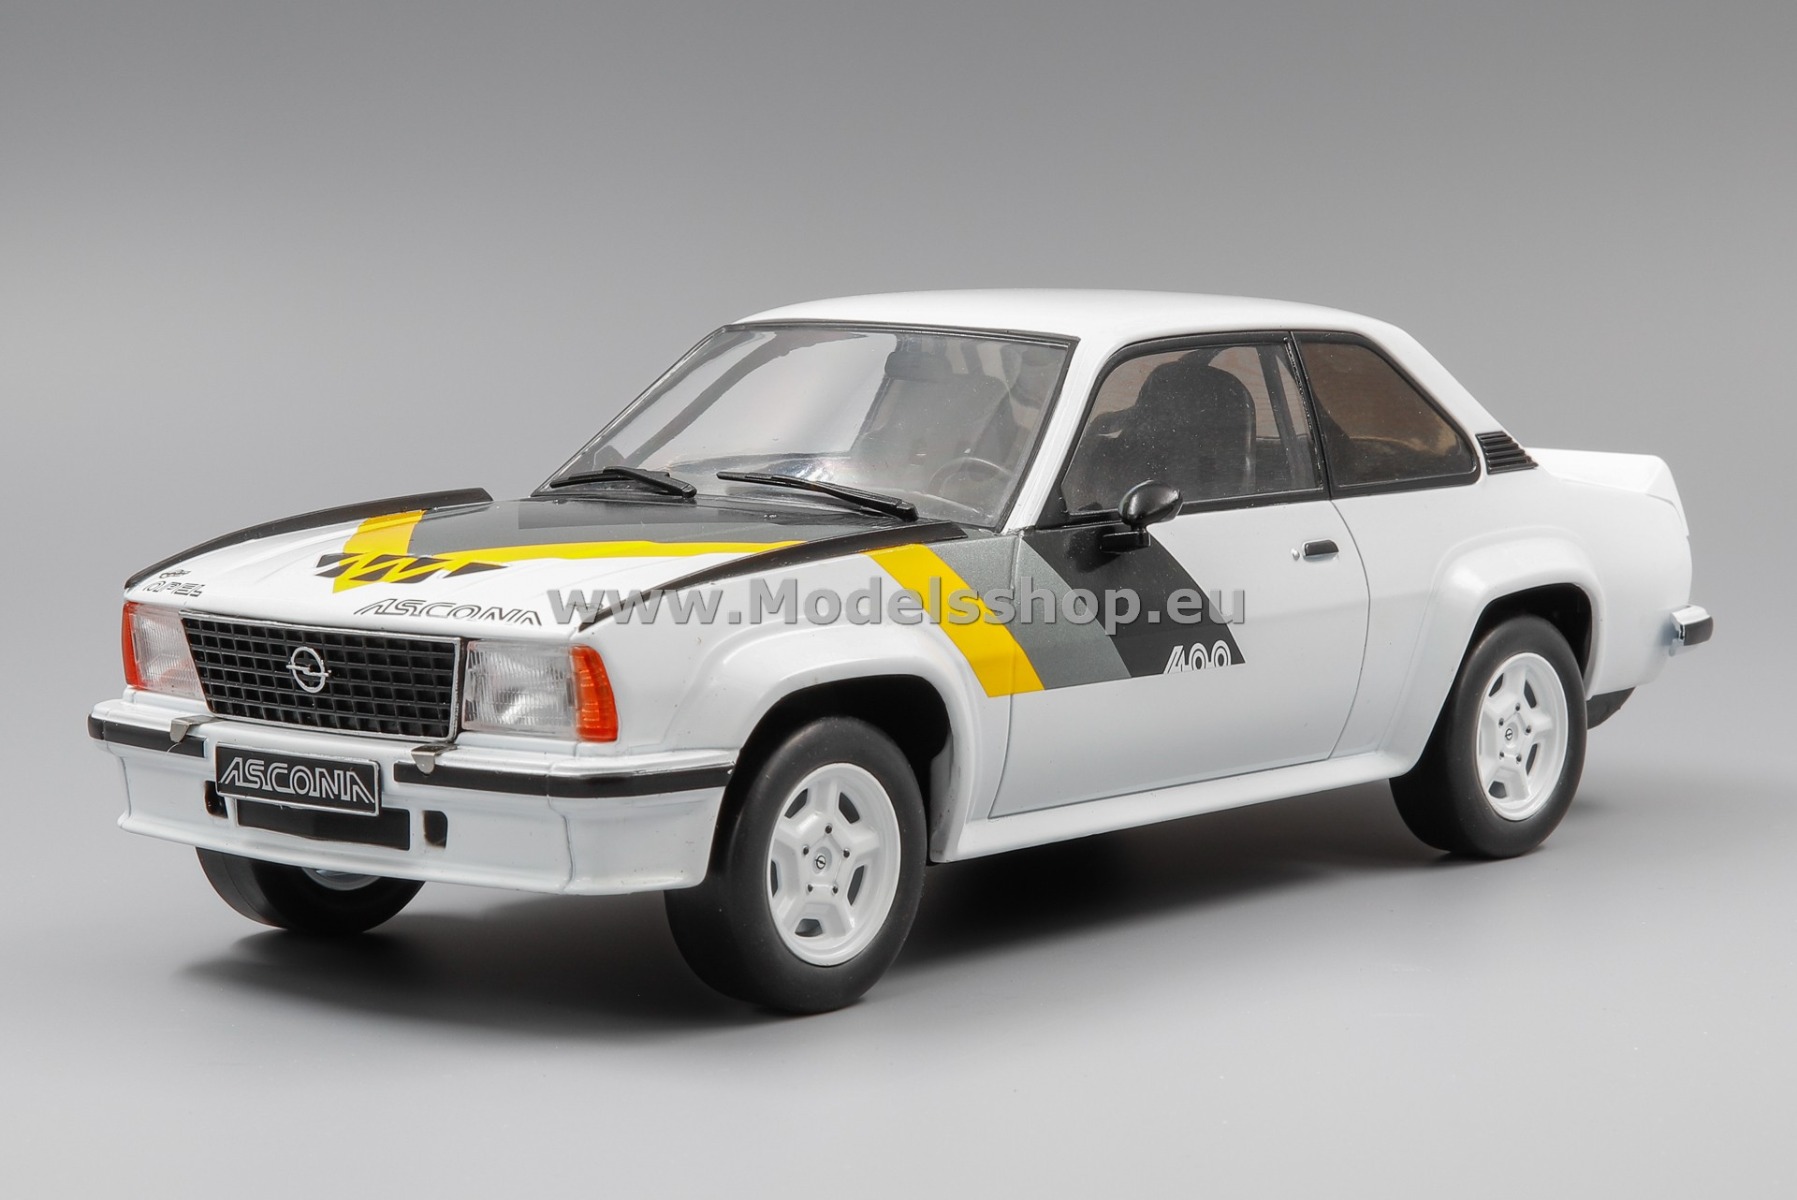 IXO18CMC126.22 Opel Ascona B 400, 1982 /white - decorated/